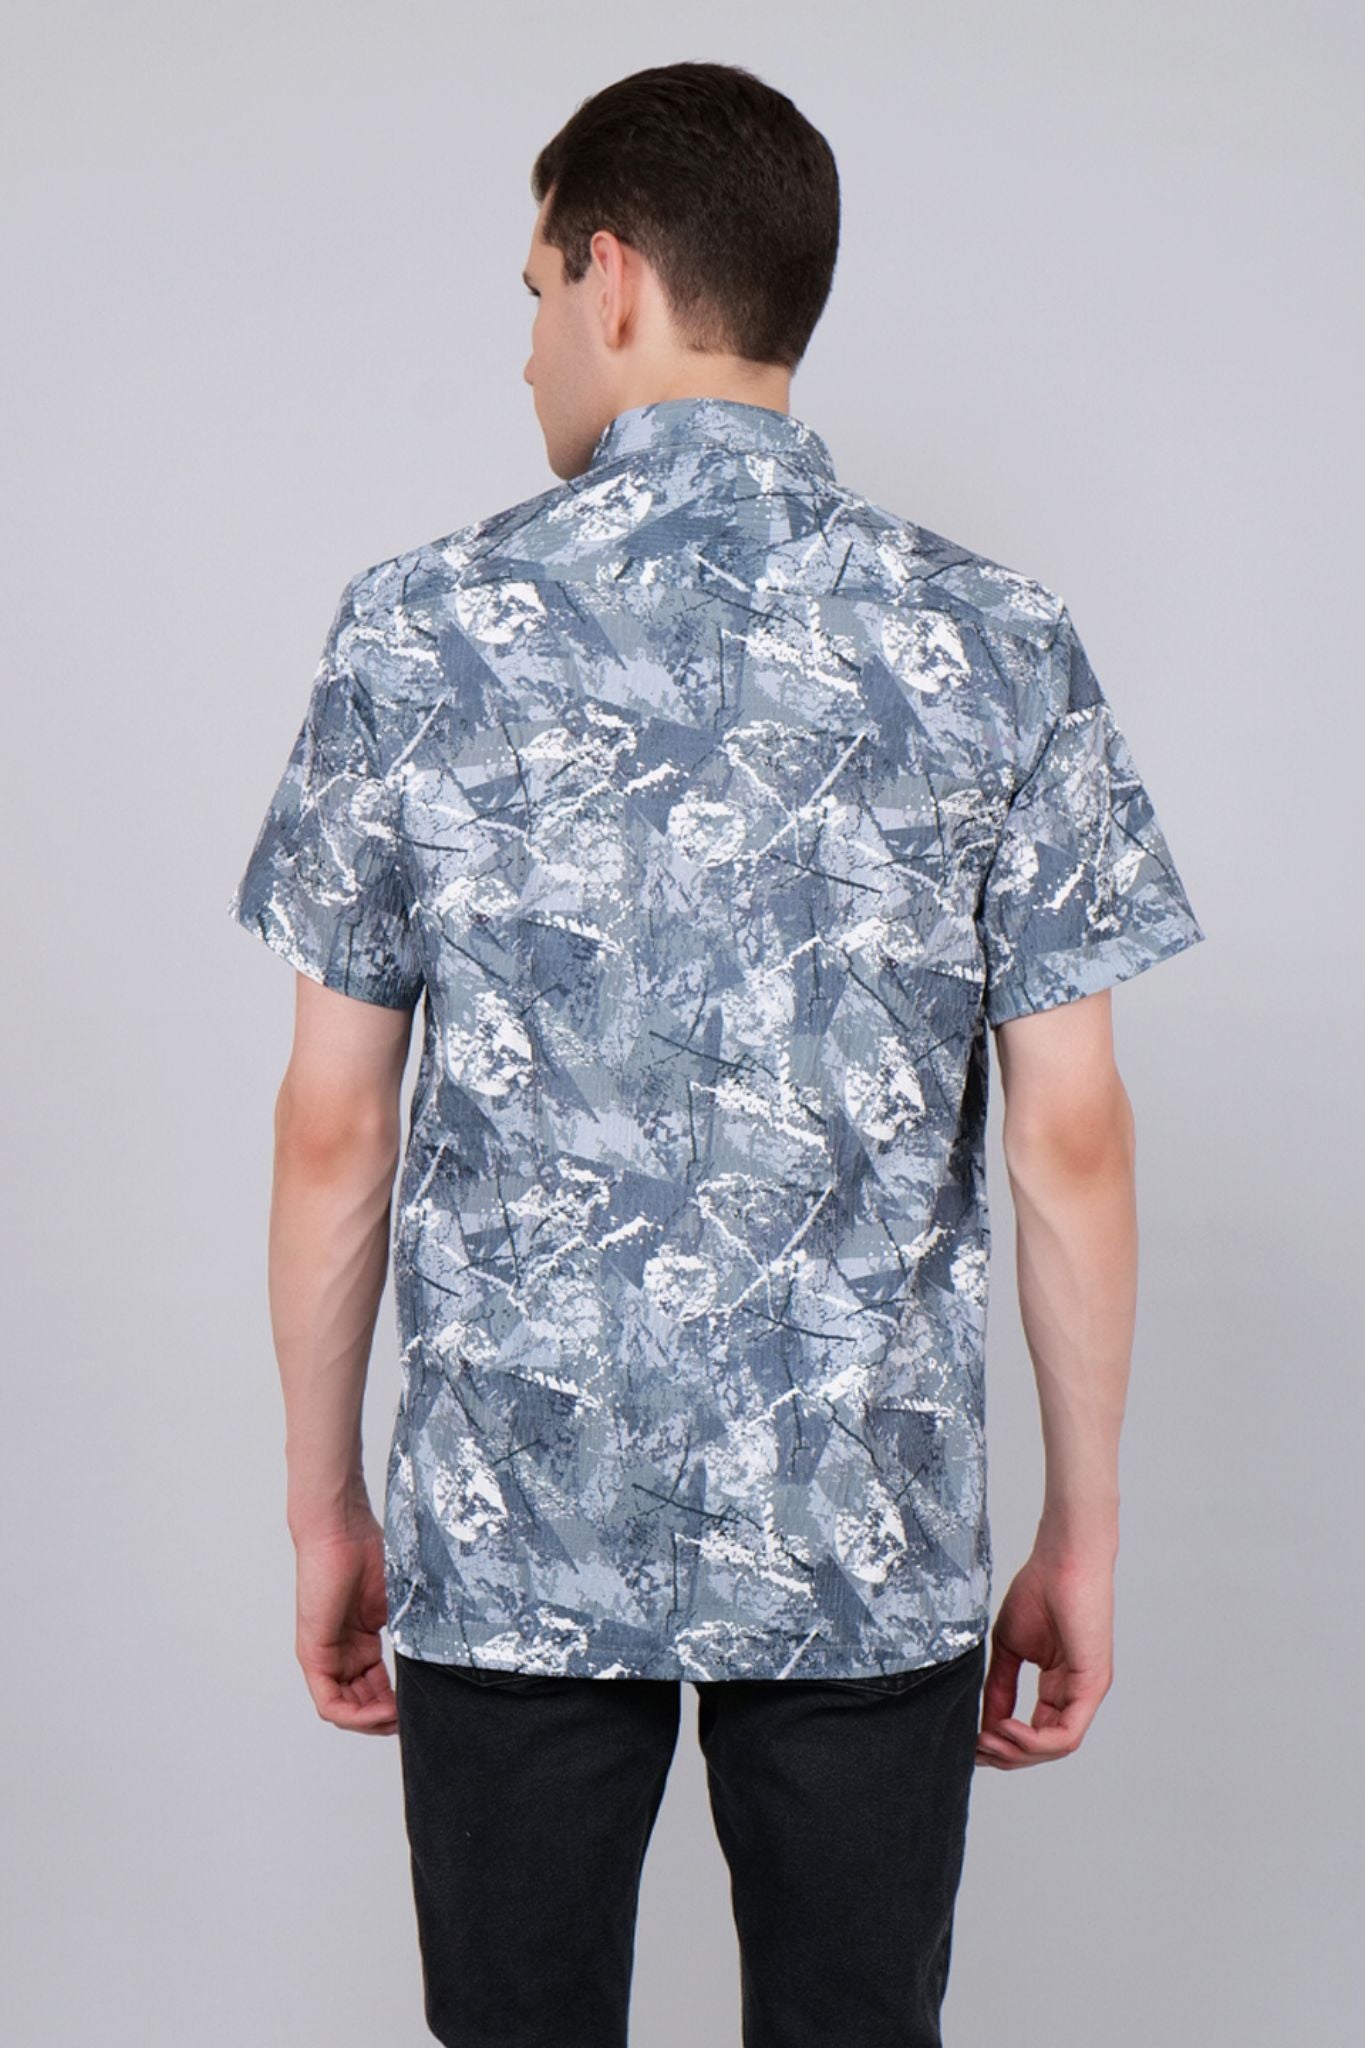 Bermuda Printed Half Sleeve Shirt